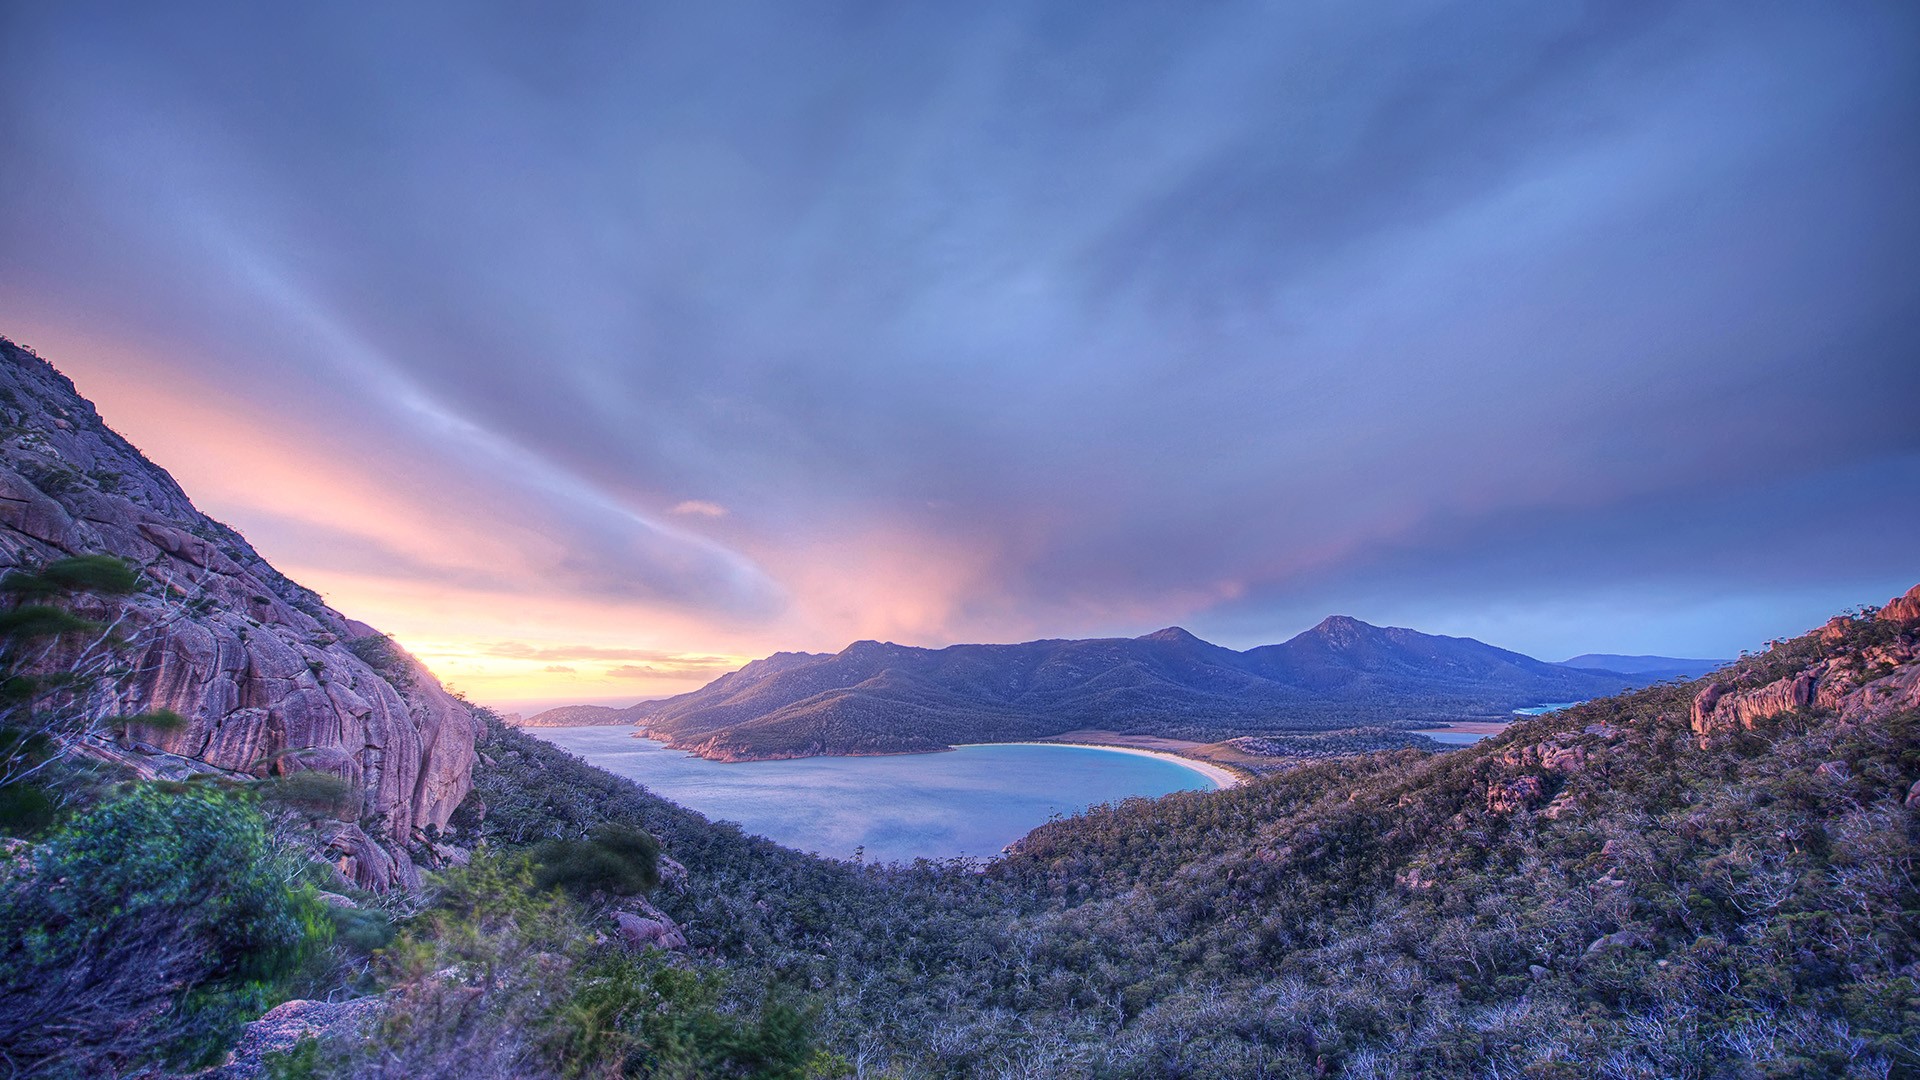 General 1920x1080 nature landscape clouds mountains plants rocks water bay Wineglass Bay Tasmania Australia